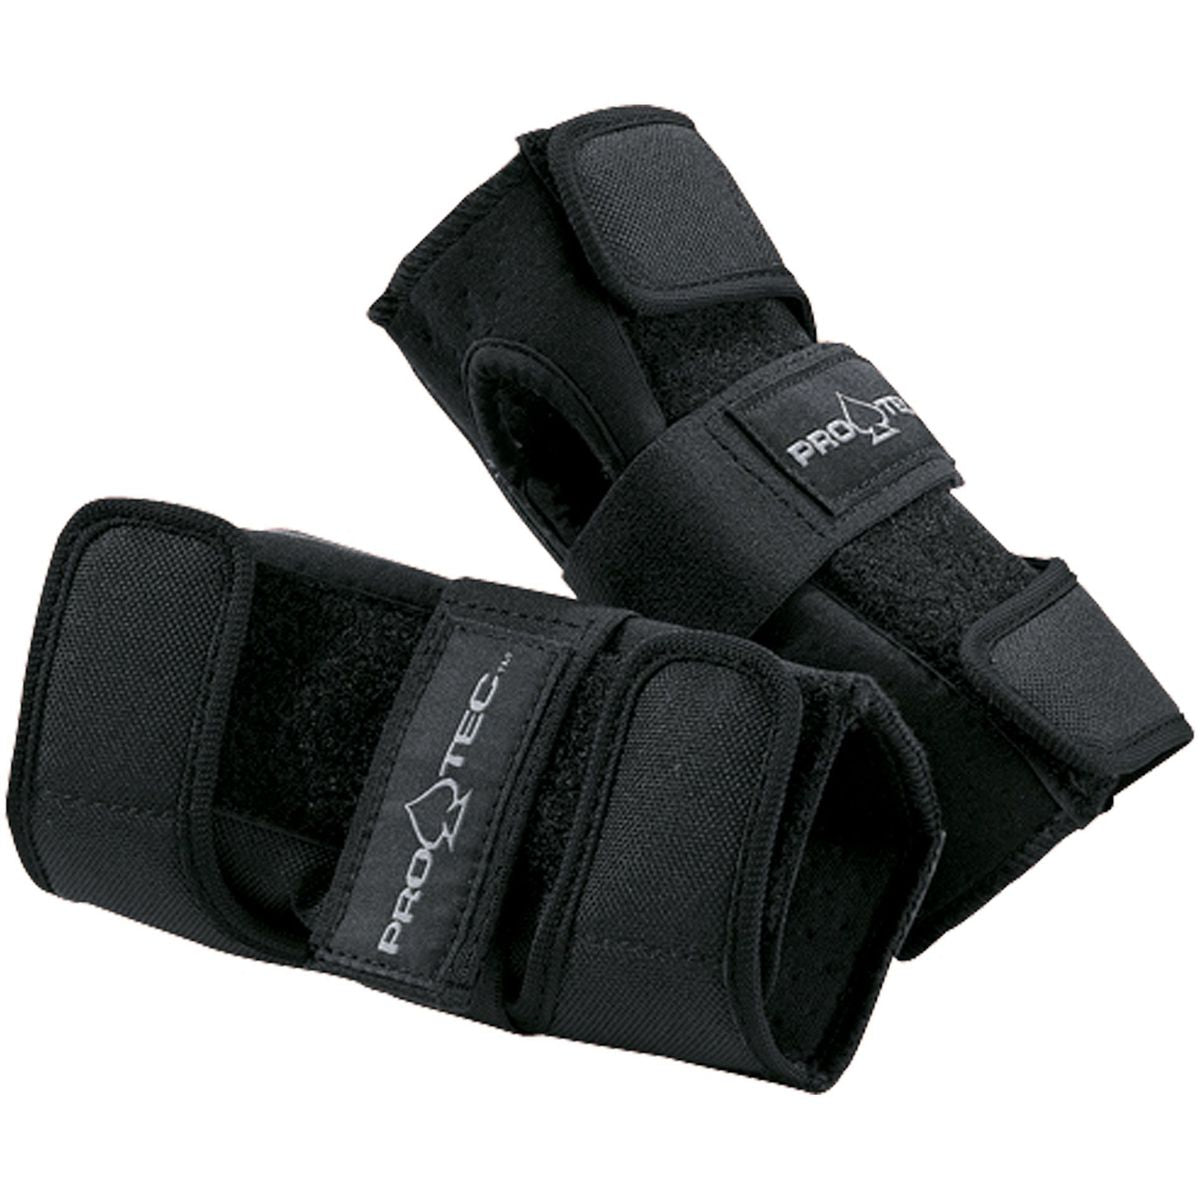 Pro tec Street Wrist Guard Pads - Black image 1